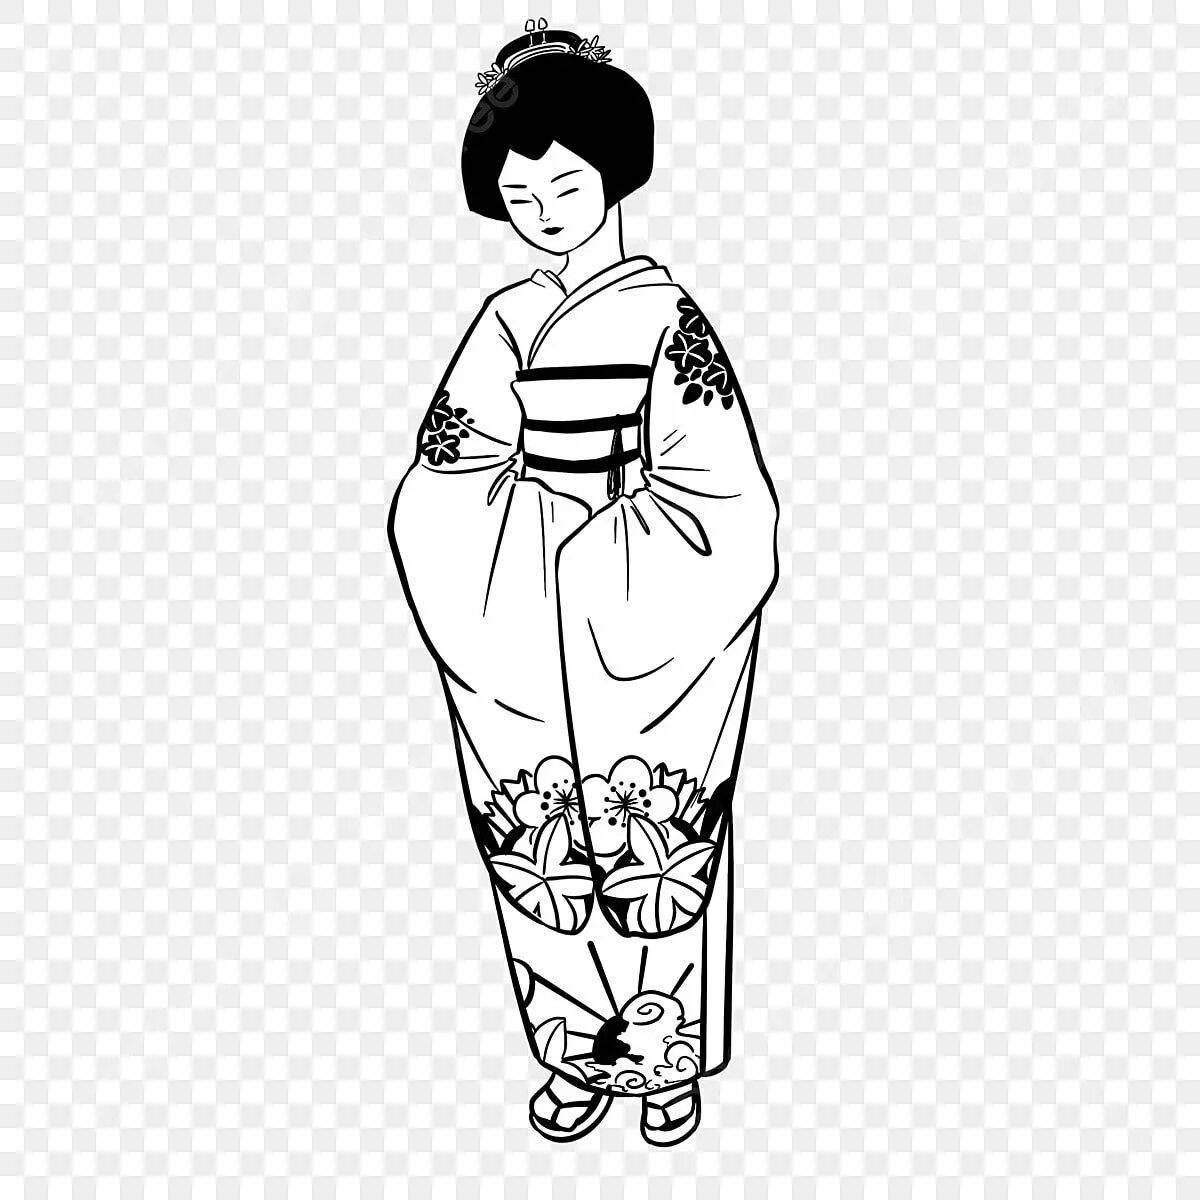 Сказочная японская девочка-раскраска